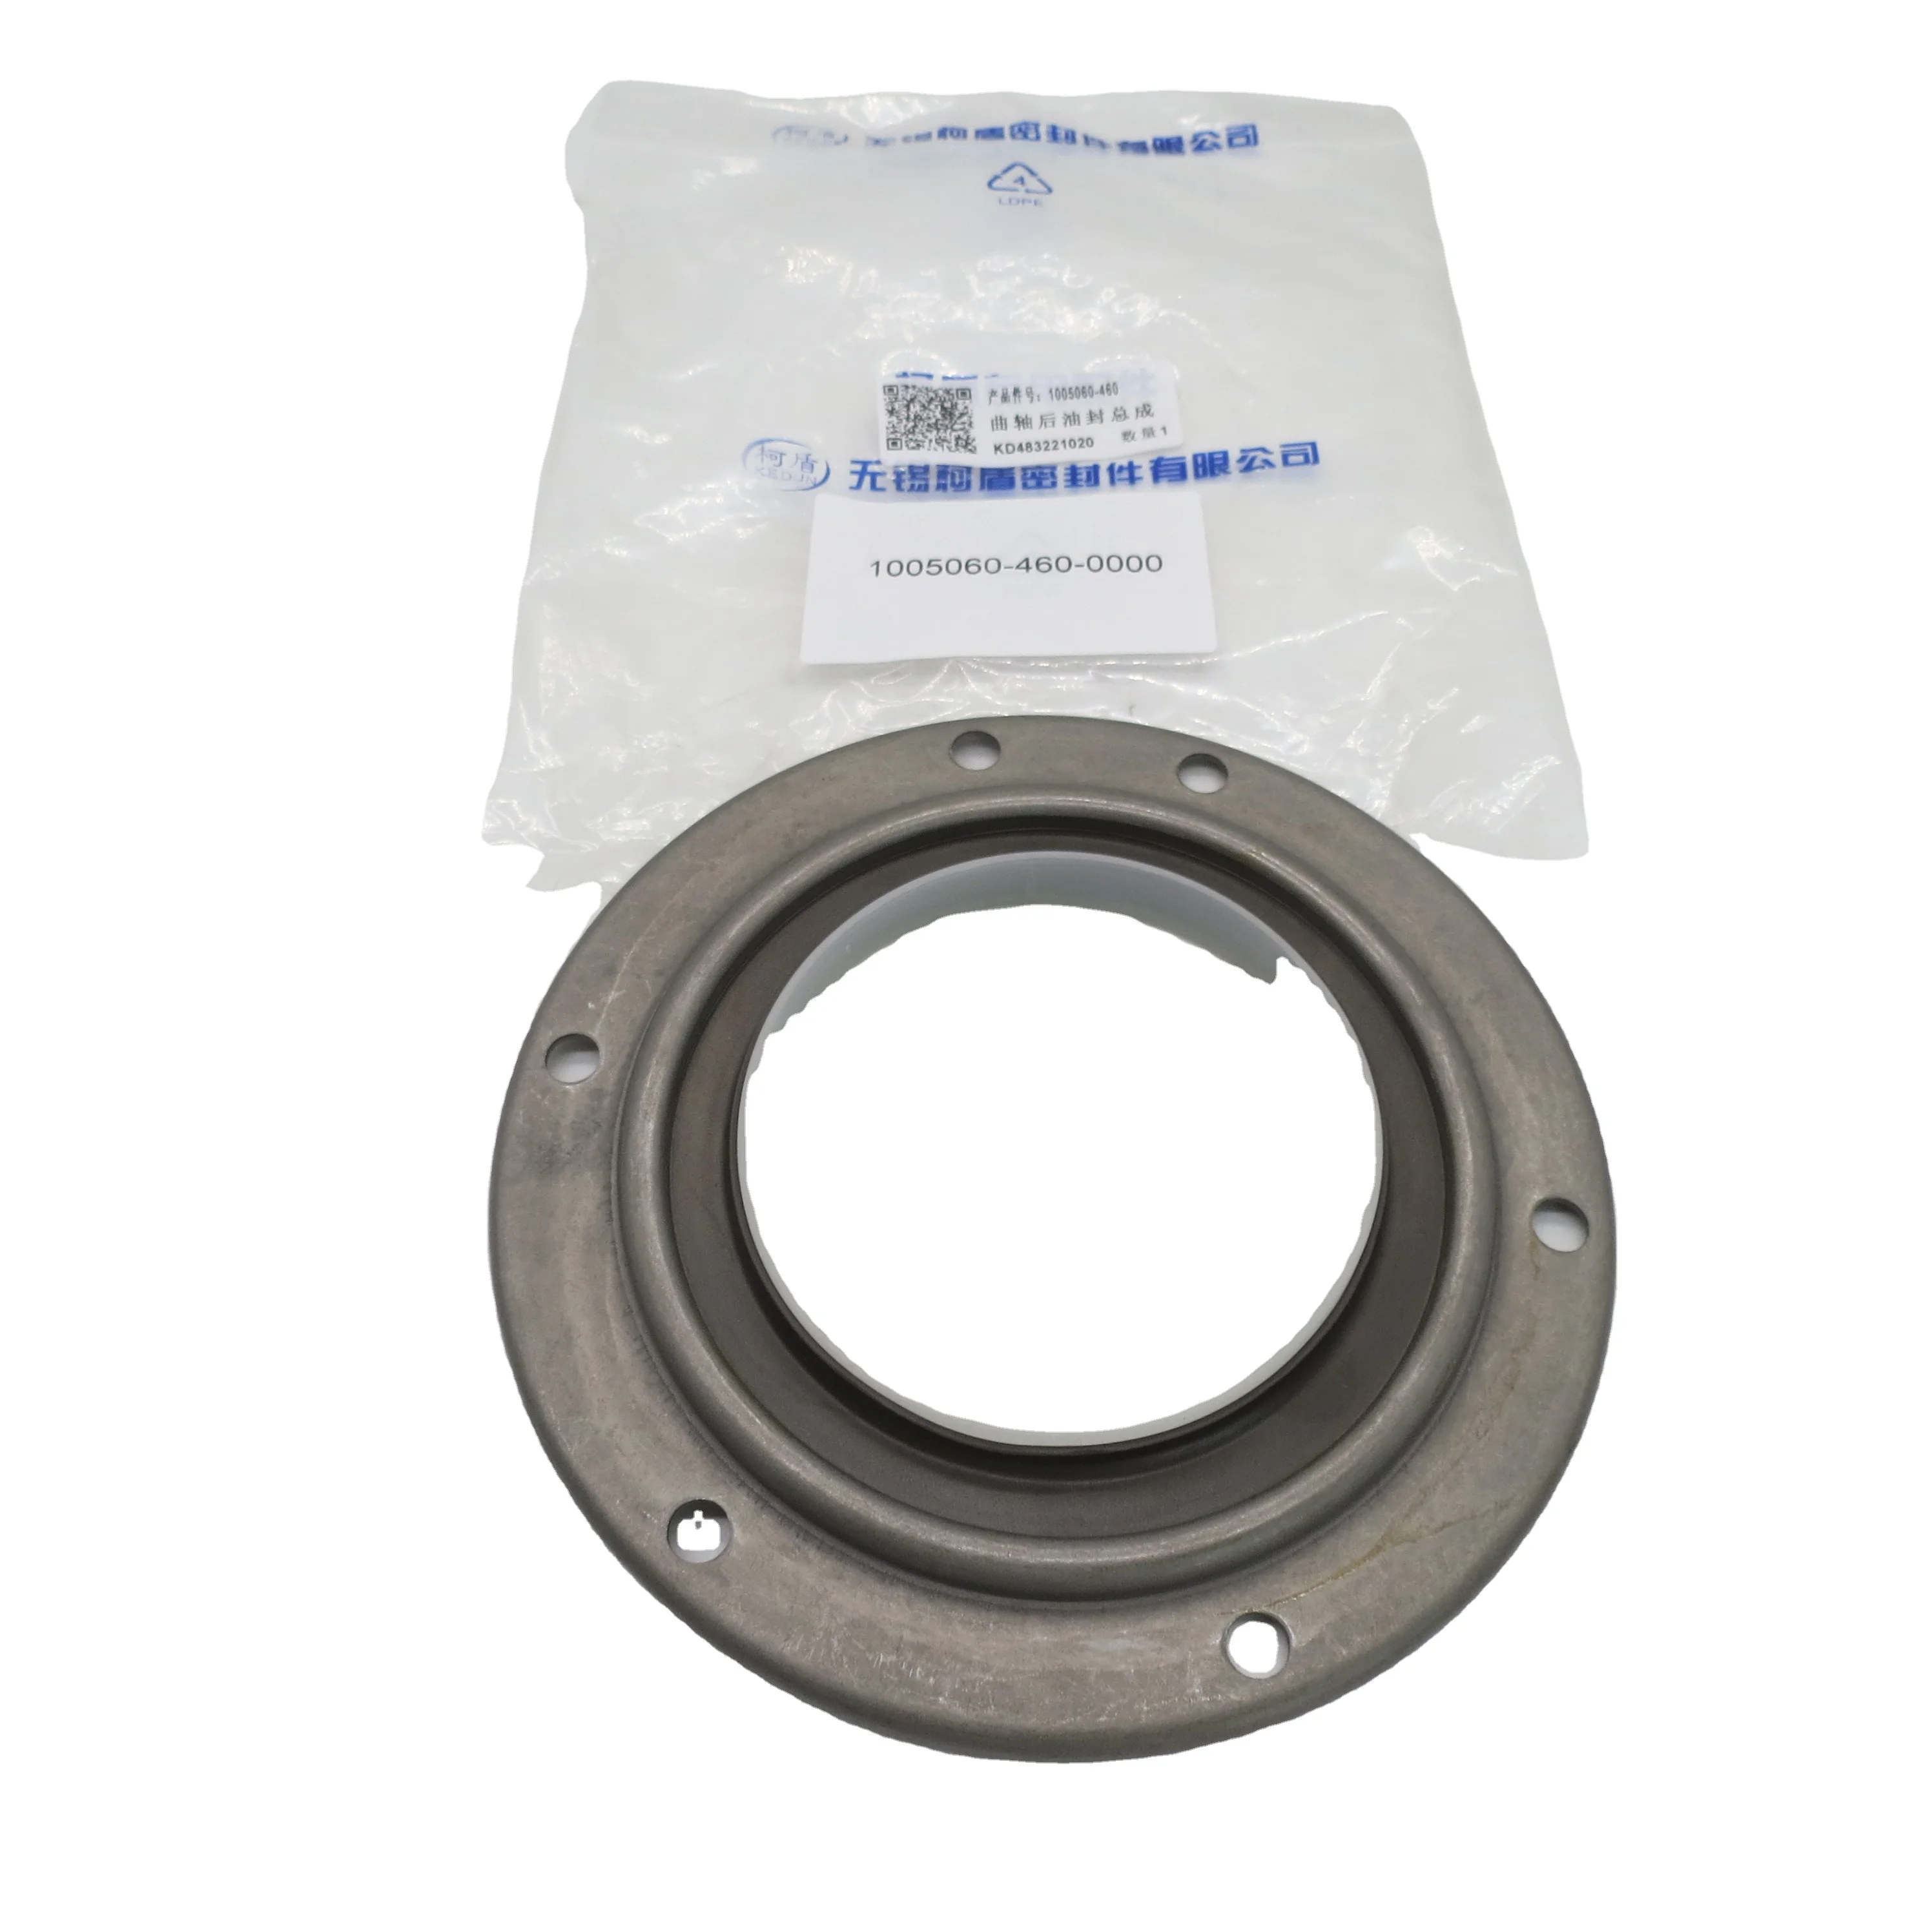 

High quality automotive parts crankshaft rear oil seal assembly 1005060-460-0000